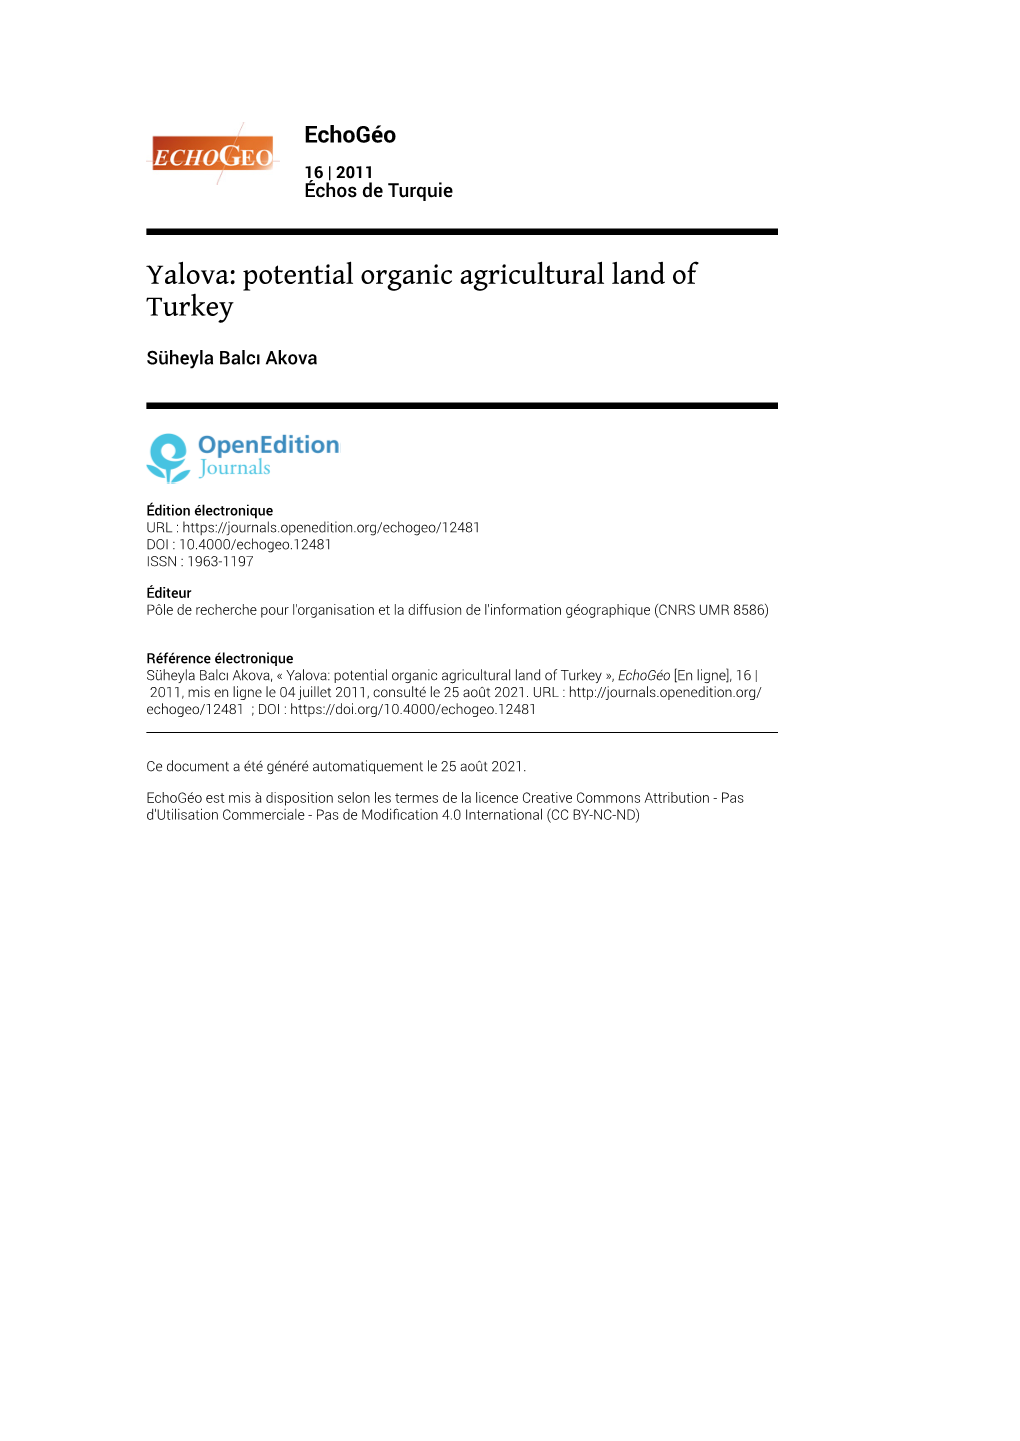 Echogéo, 16 | 2011 Yalova: Potential Organic Agricultural Land of Turkey 2